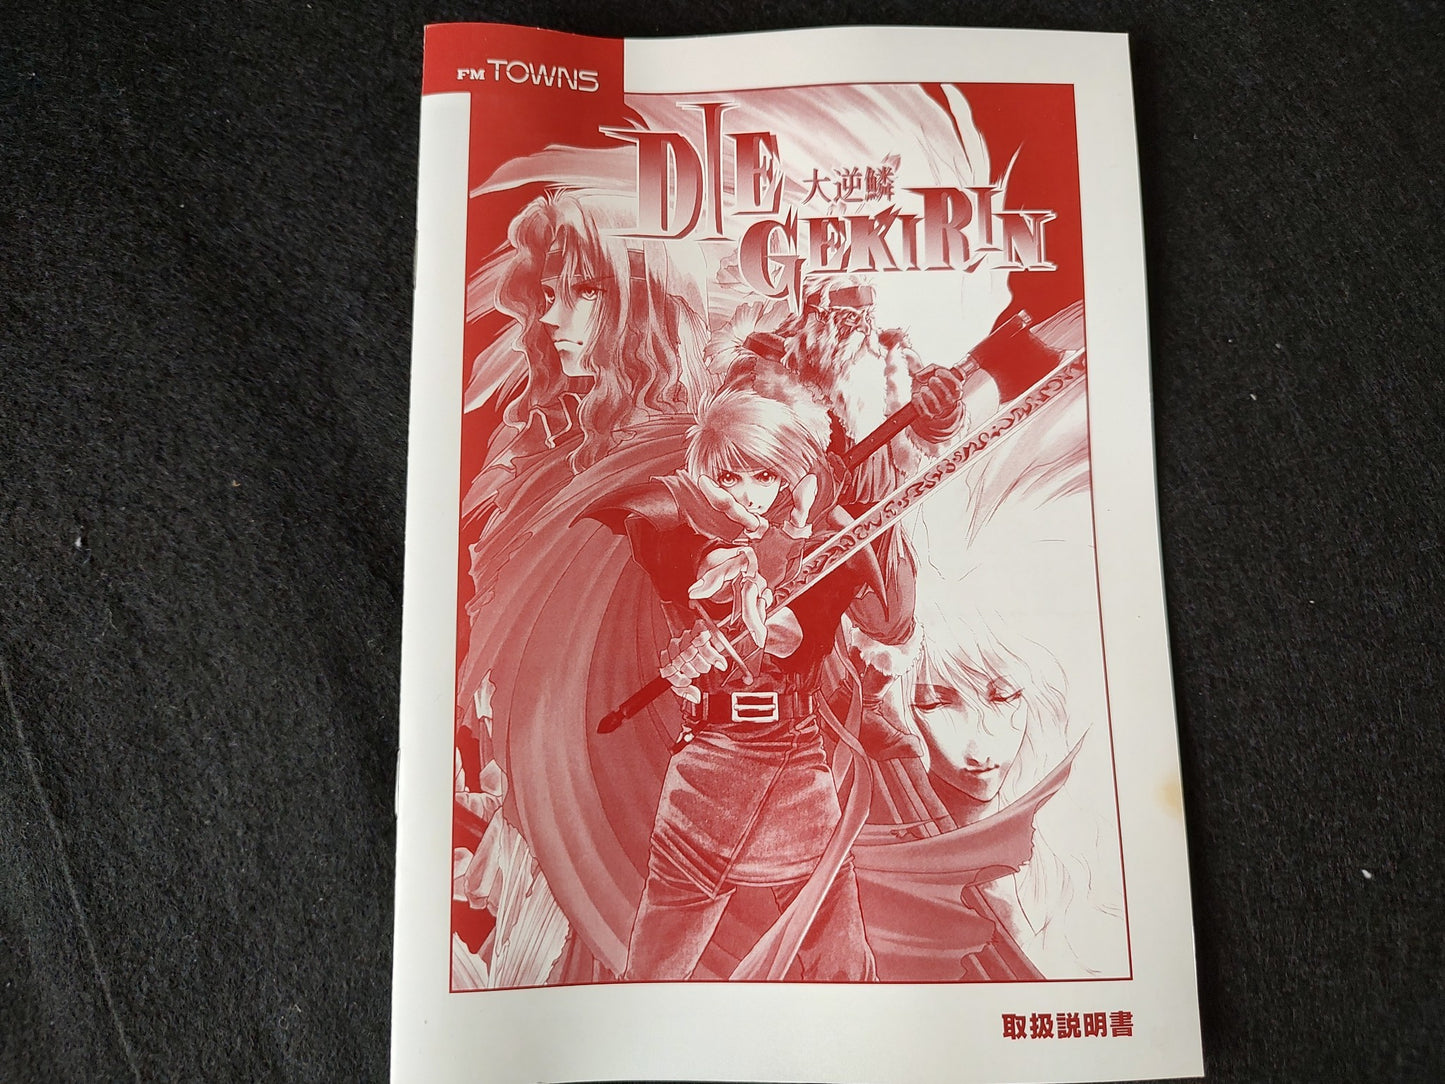 DAI GEKIRIN FM TOWNS Action RPG Game Disk,w/Manual, Box set, Not tested-f0614-